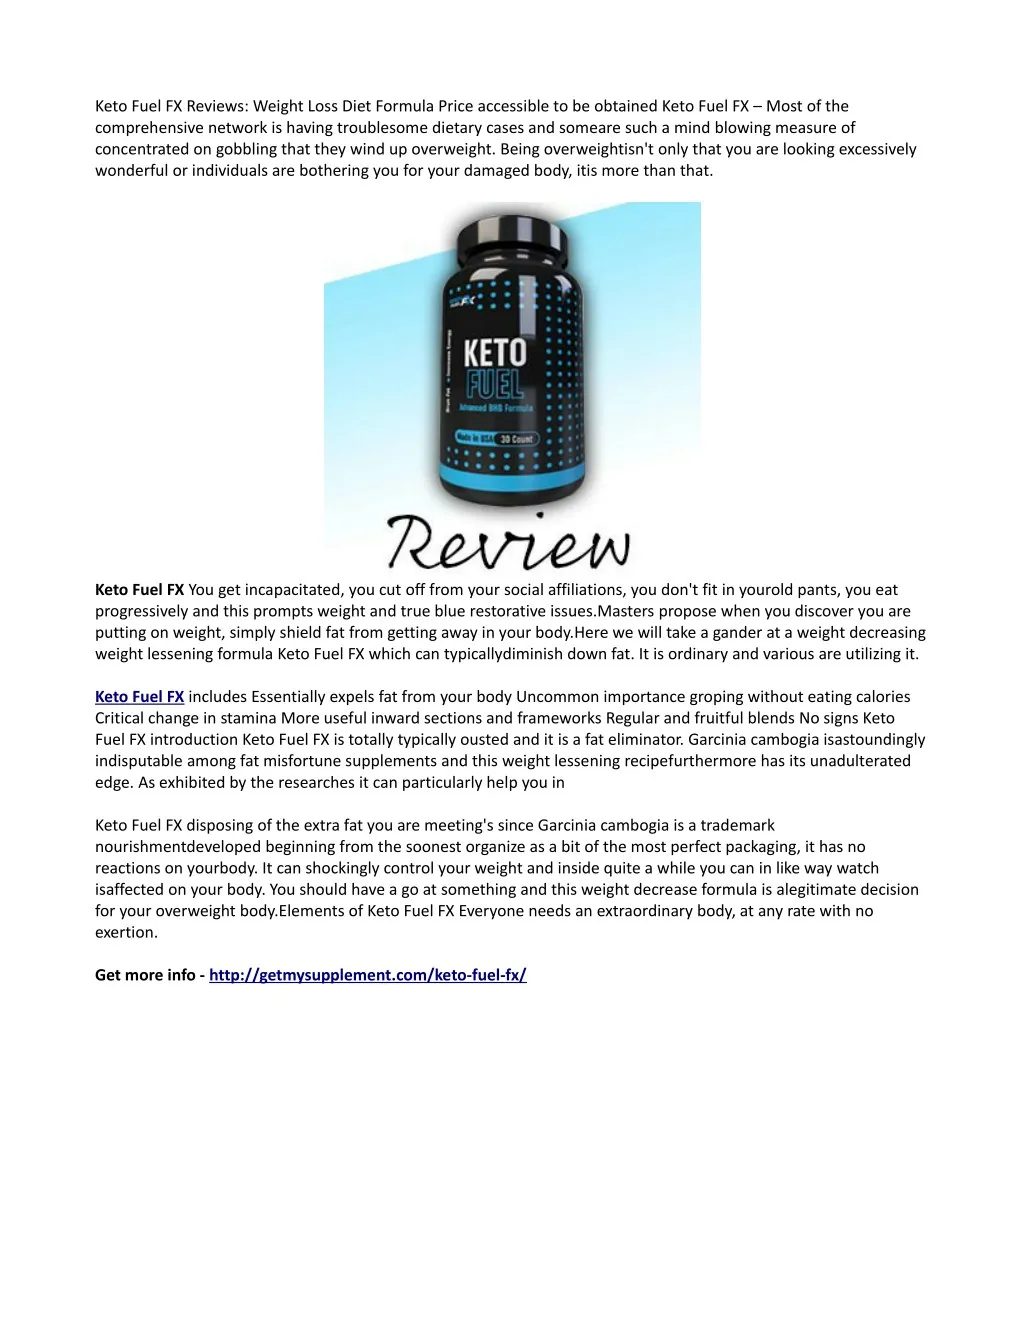 keto fuel fx reviews weight loss diet formula